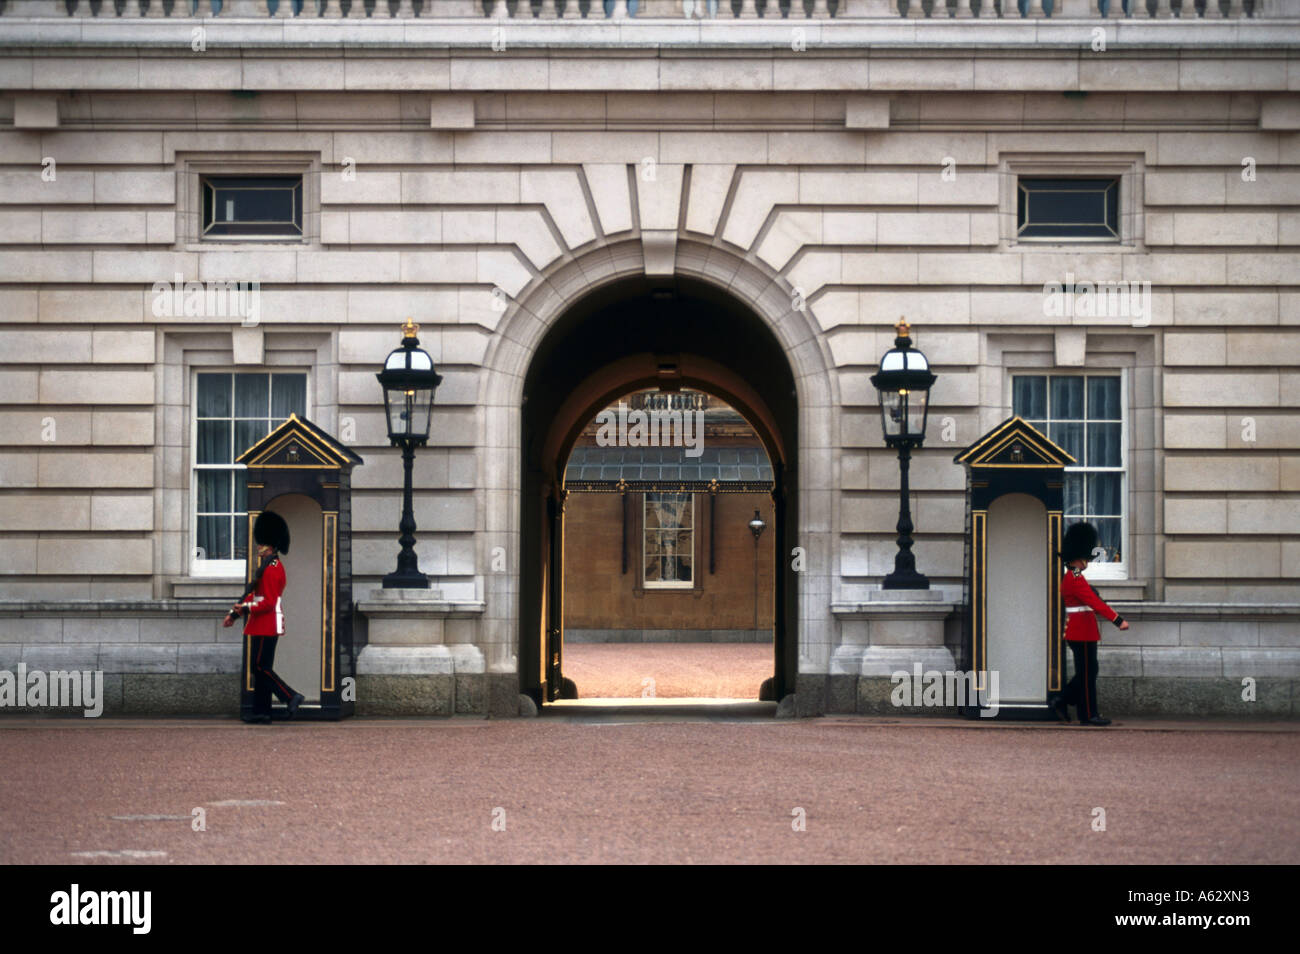 Palace guards at archway entrance of palace, Buckingham Palace, London, England Stock Photo